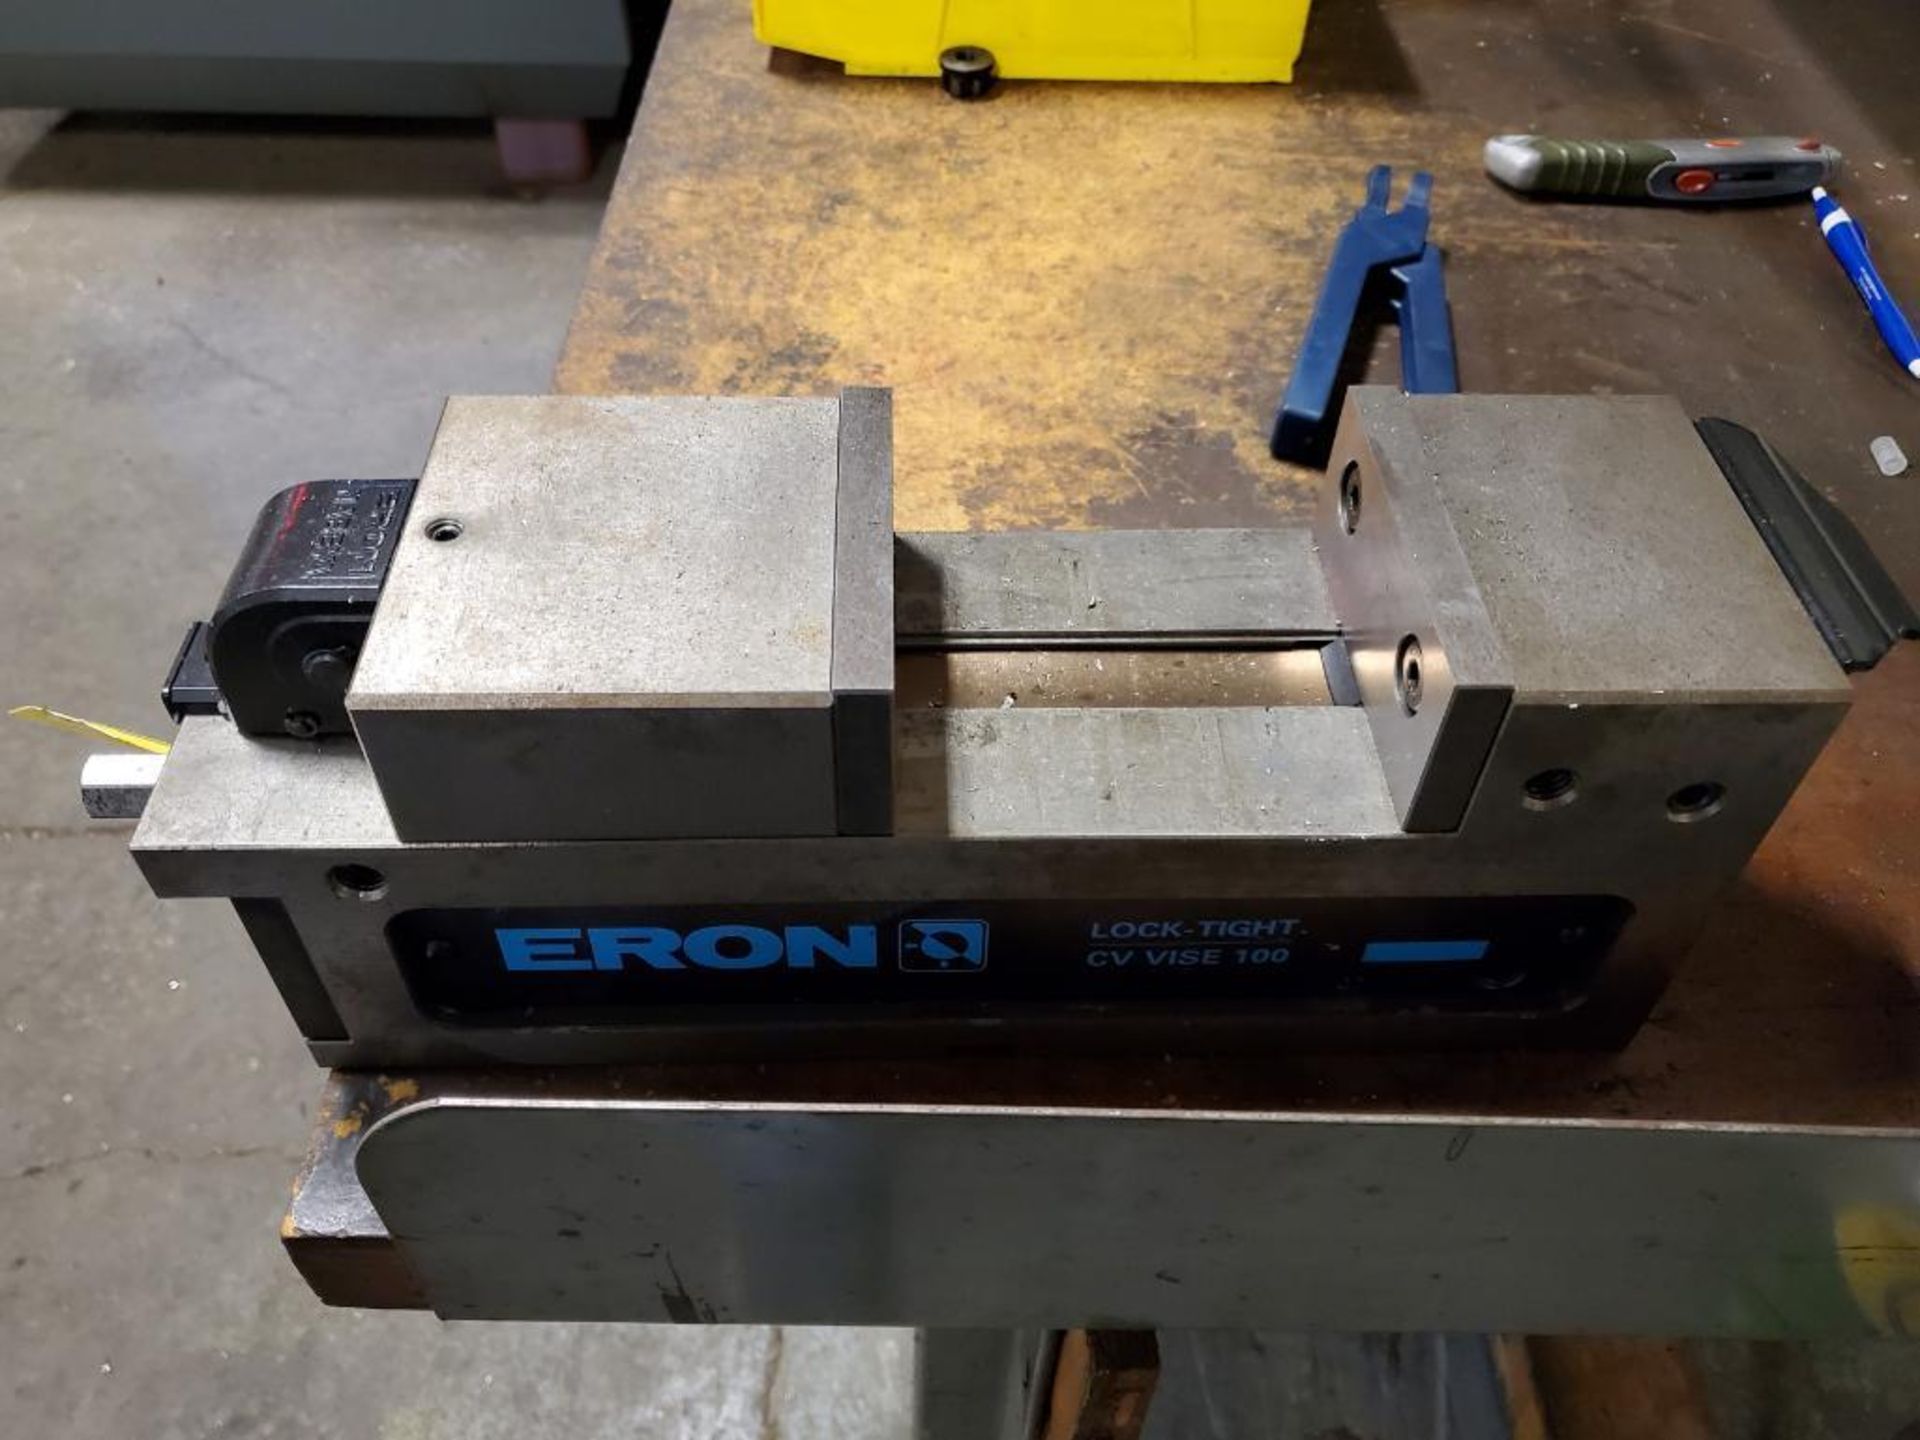 Eron Lock-Tight CV Vise 100 Machine Vise, 4" - Image 3 of 5